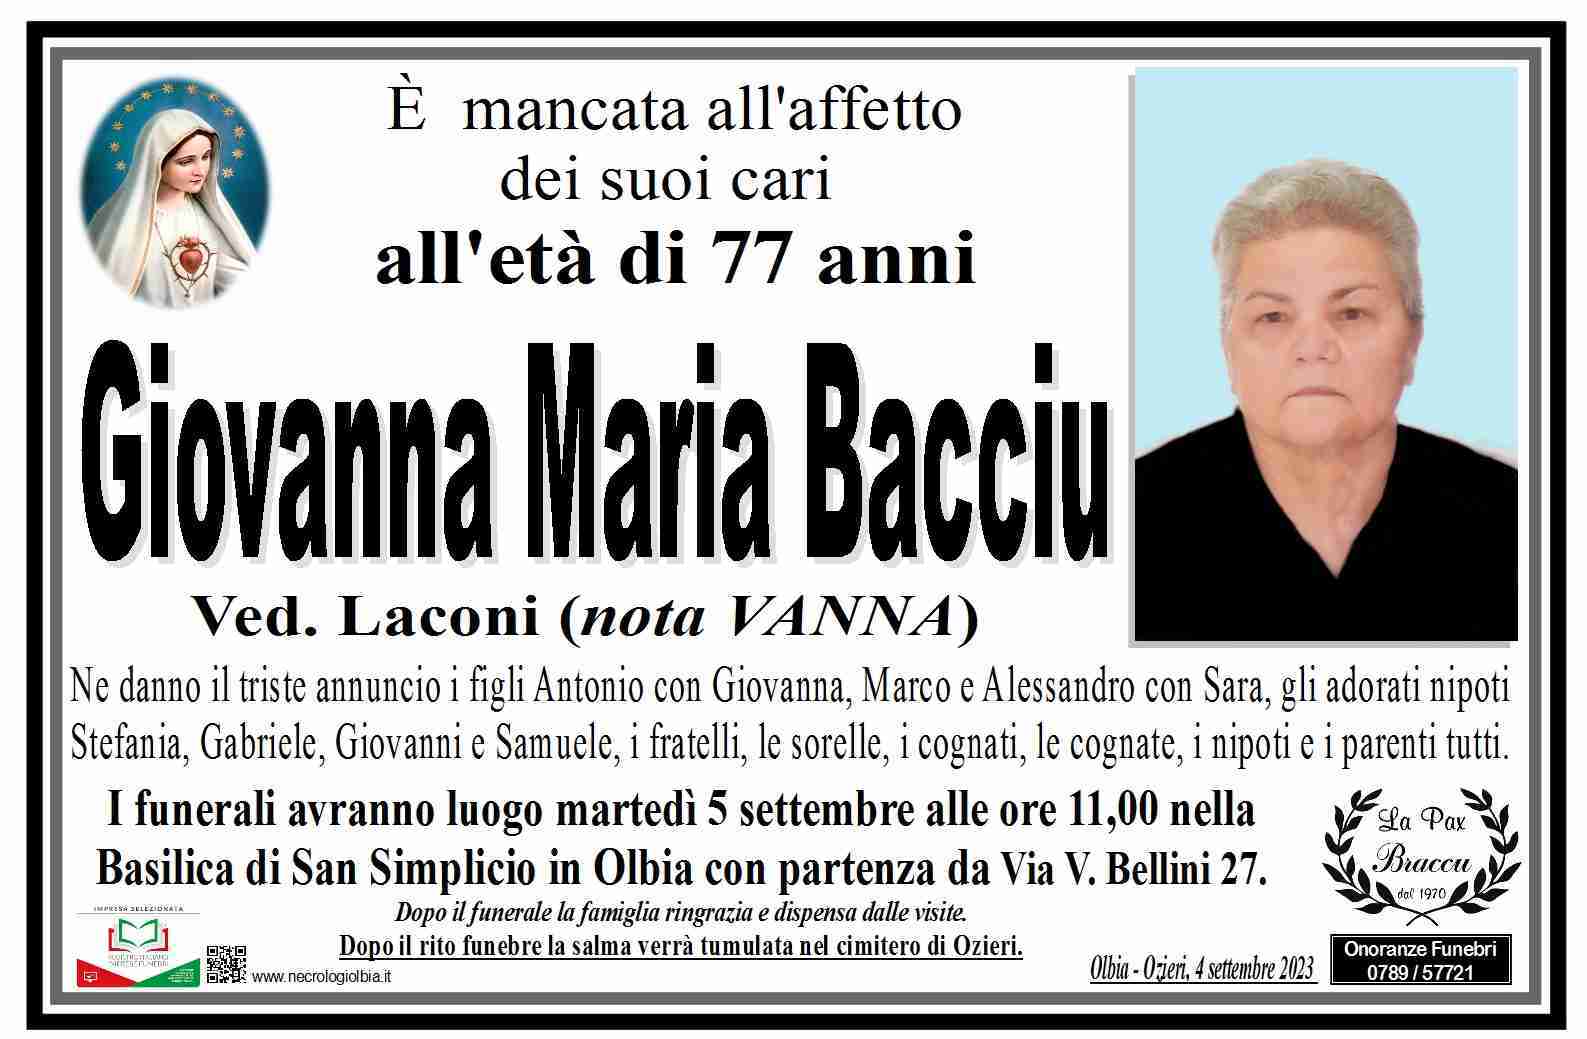 Giovanna Maria Bacciu